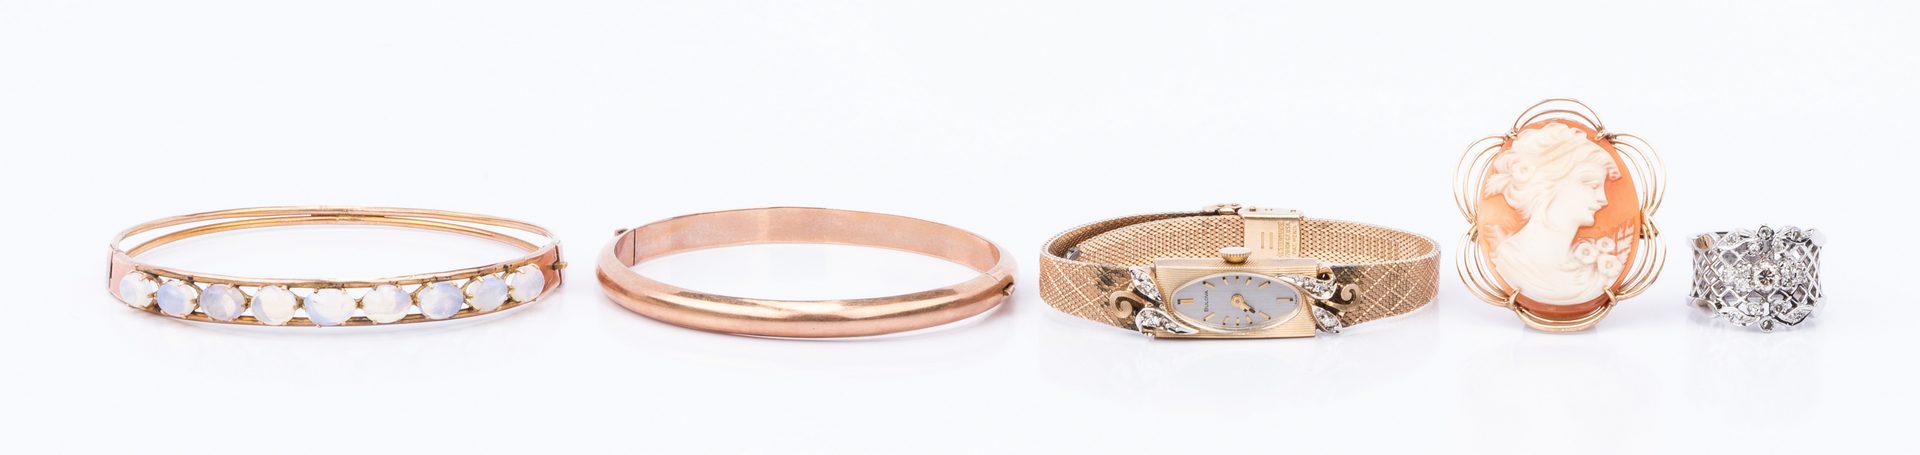 Lot 851: Five Items Ladies Gold Jewelry